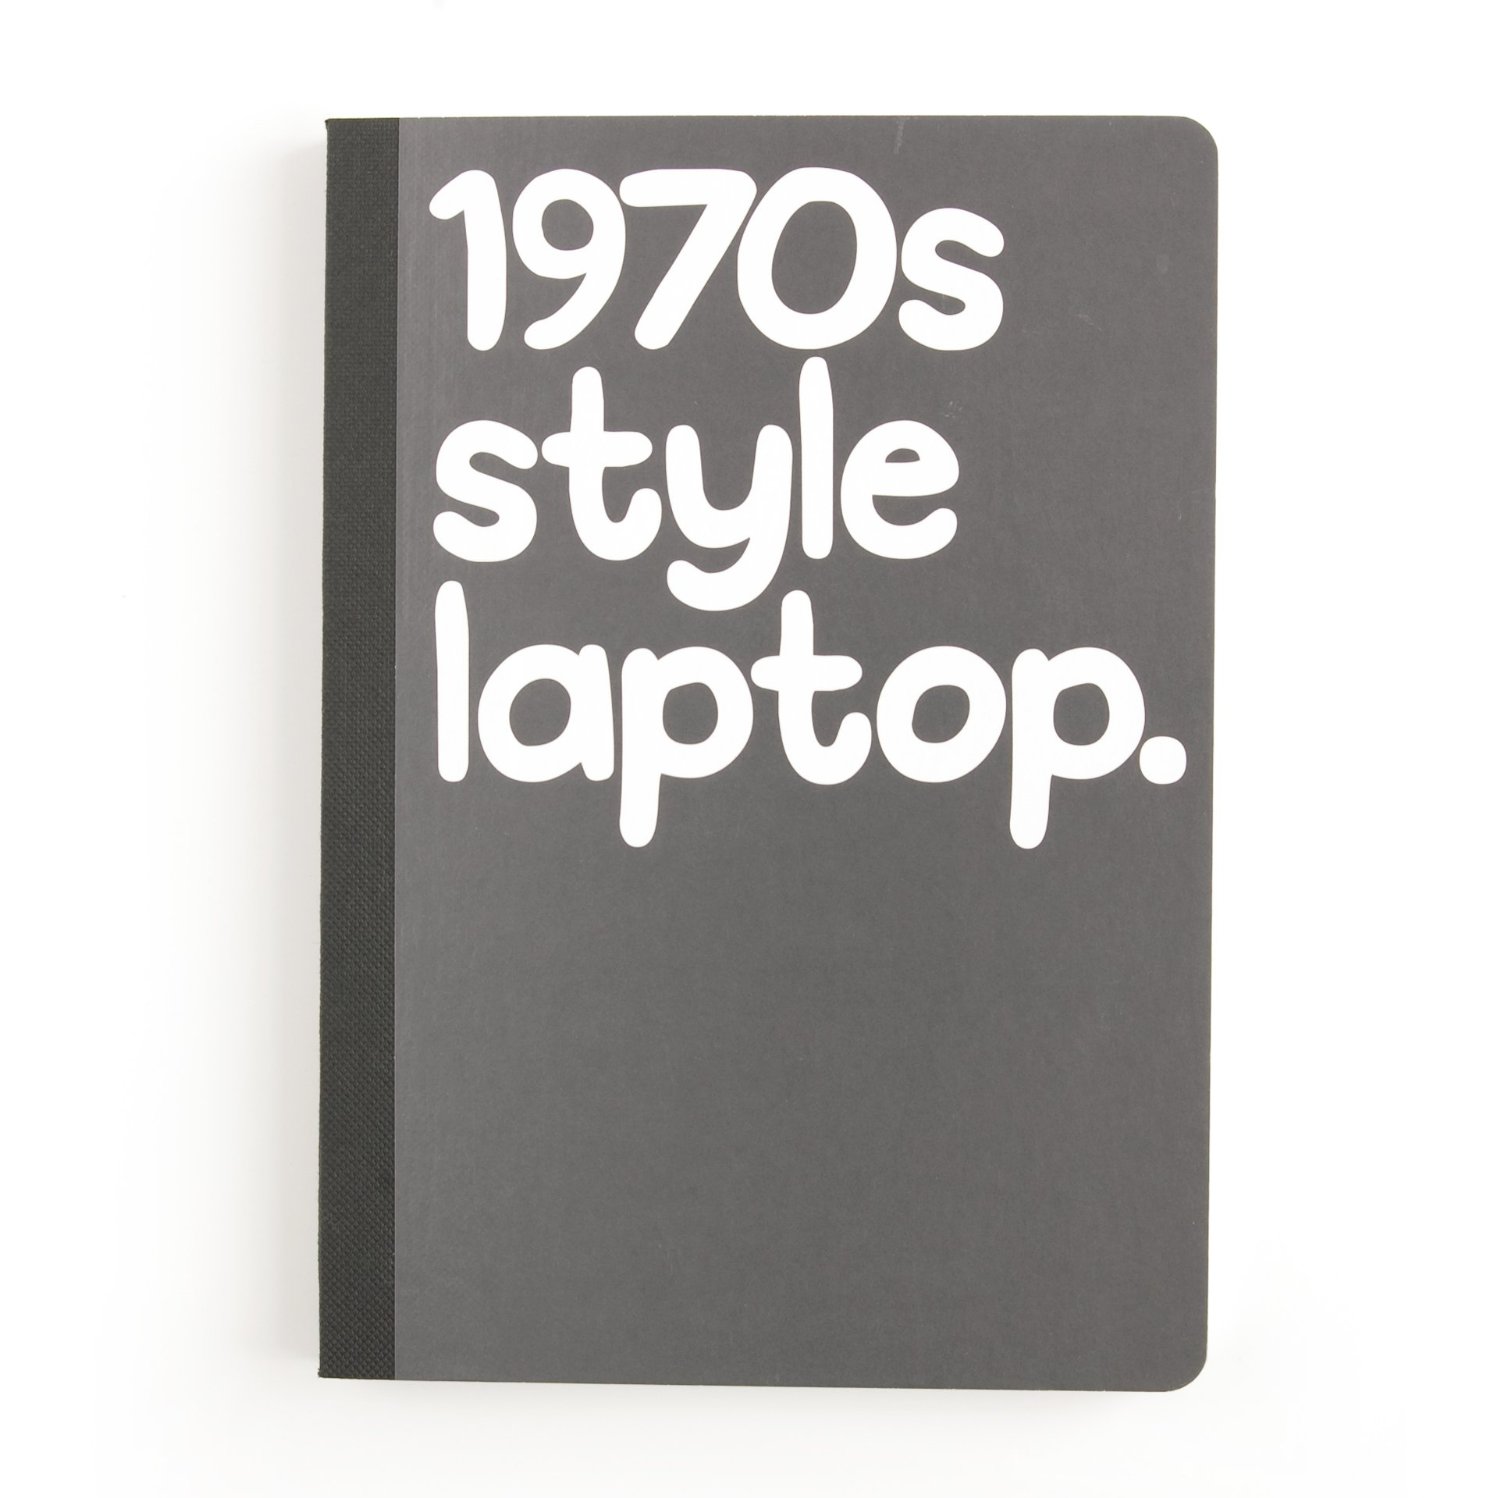 1970′s style laptop by Waldo Pancake